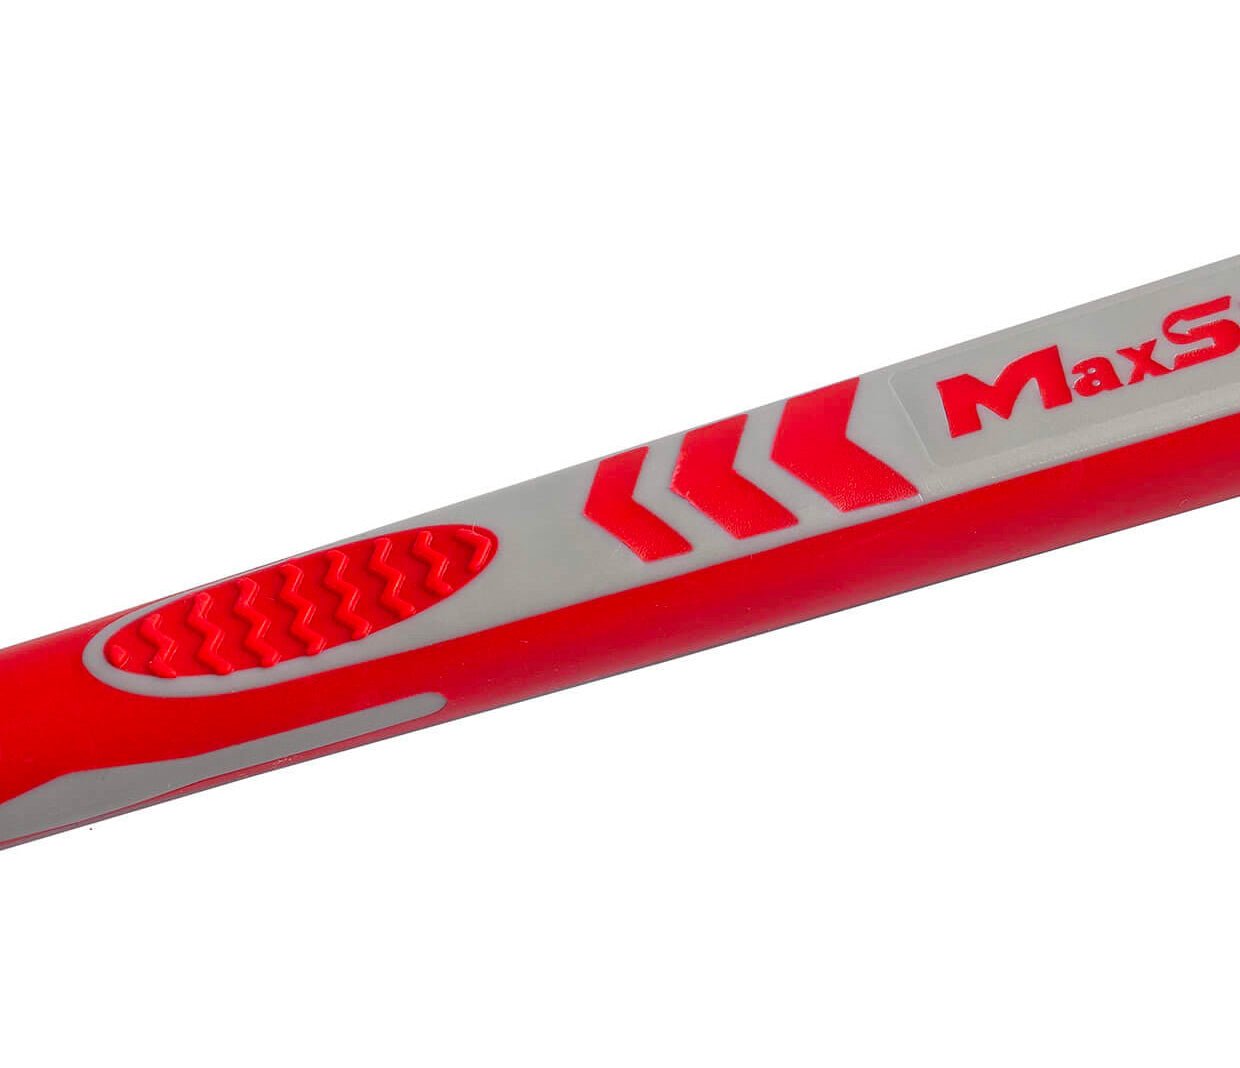 Maxshine Detailing Brush - Red & Grey - Ultra Soft 14mm